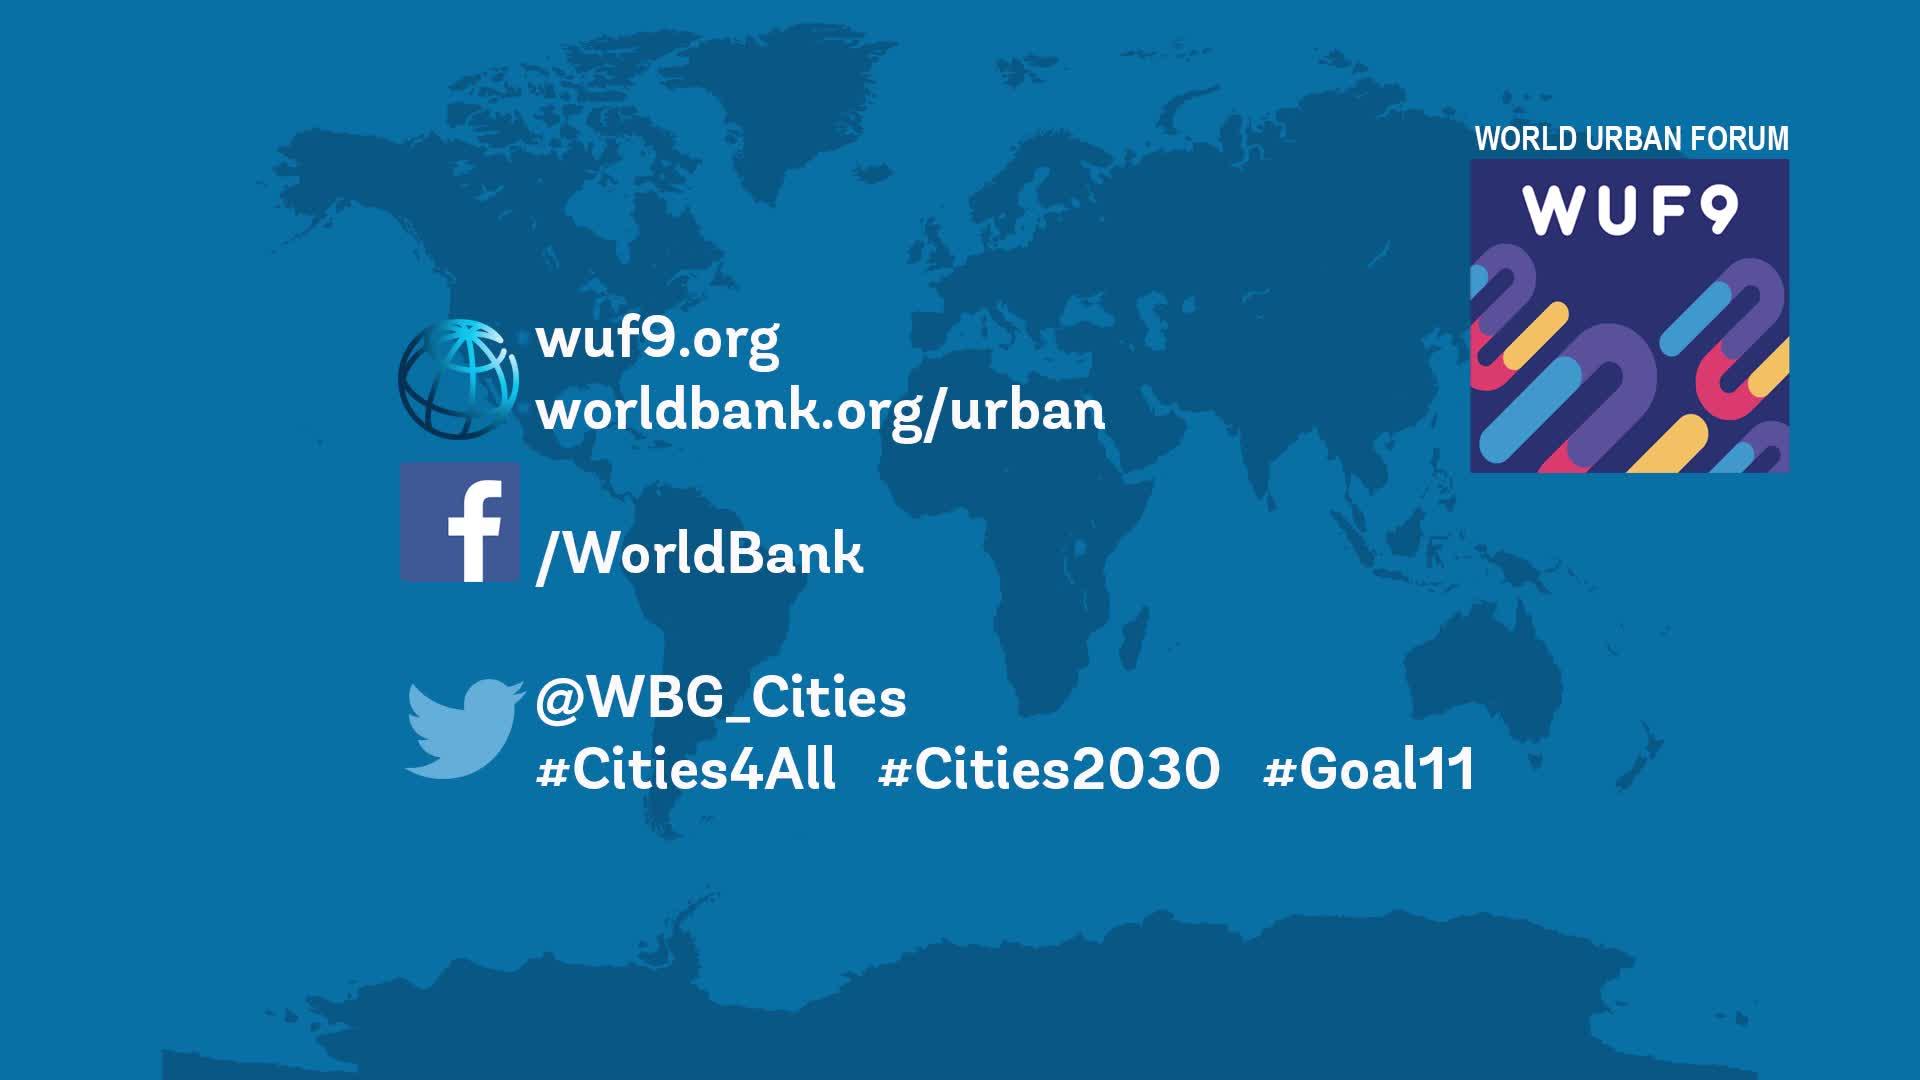 Follow the World Bank at the World Urban Forum! (Image: World Bank)